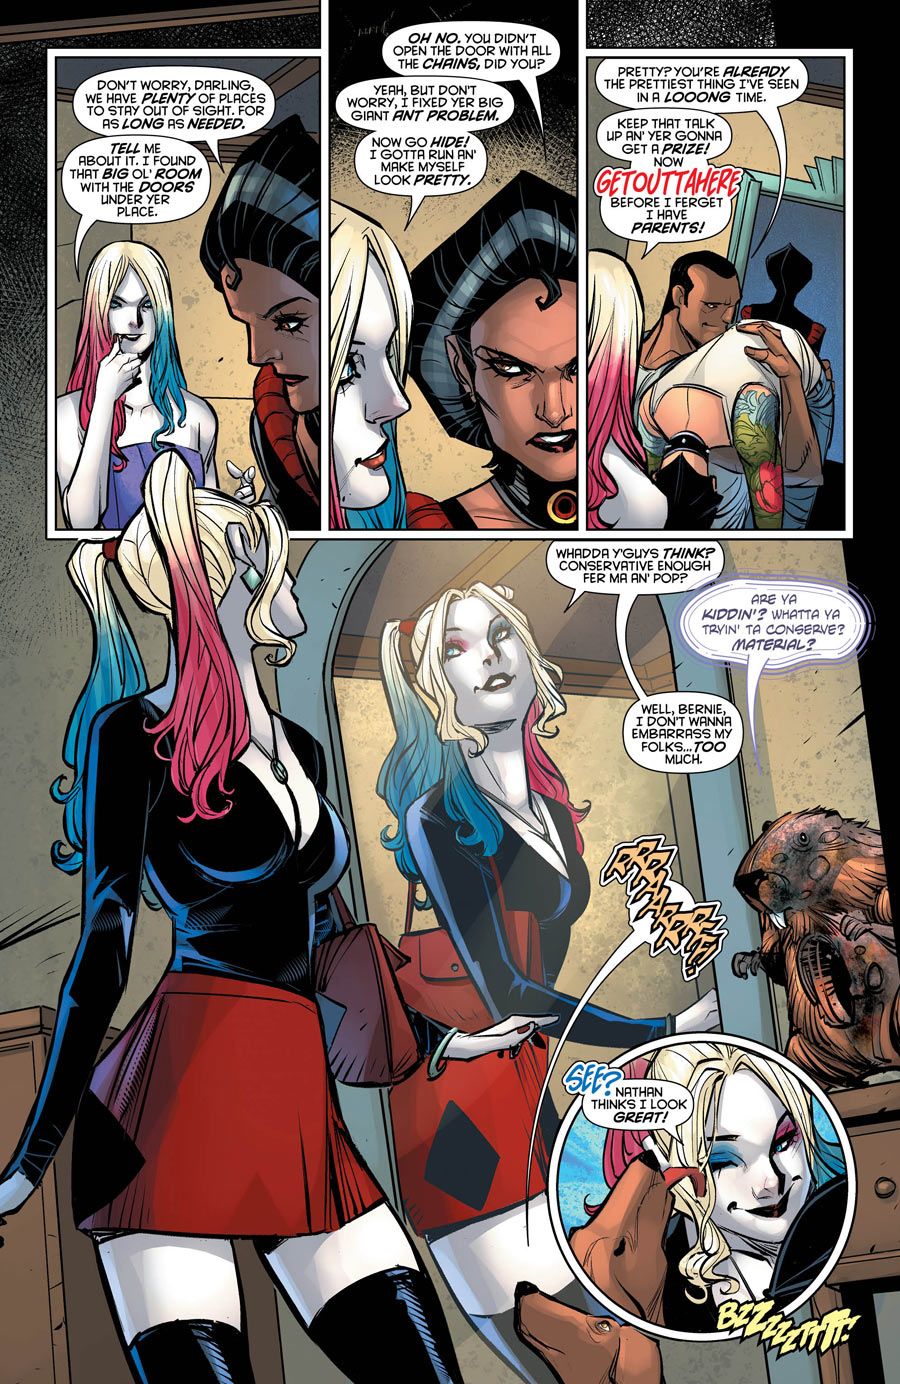 PREVIEW: Harley Quinn #23